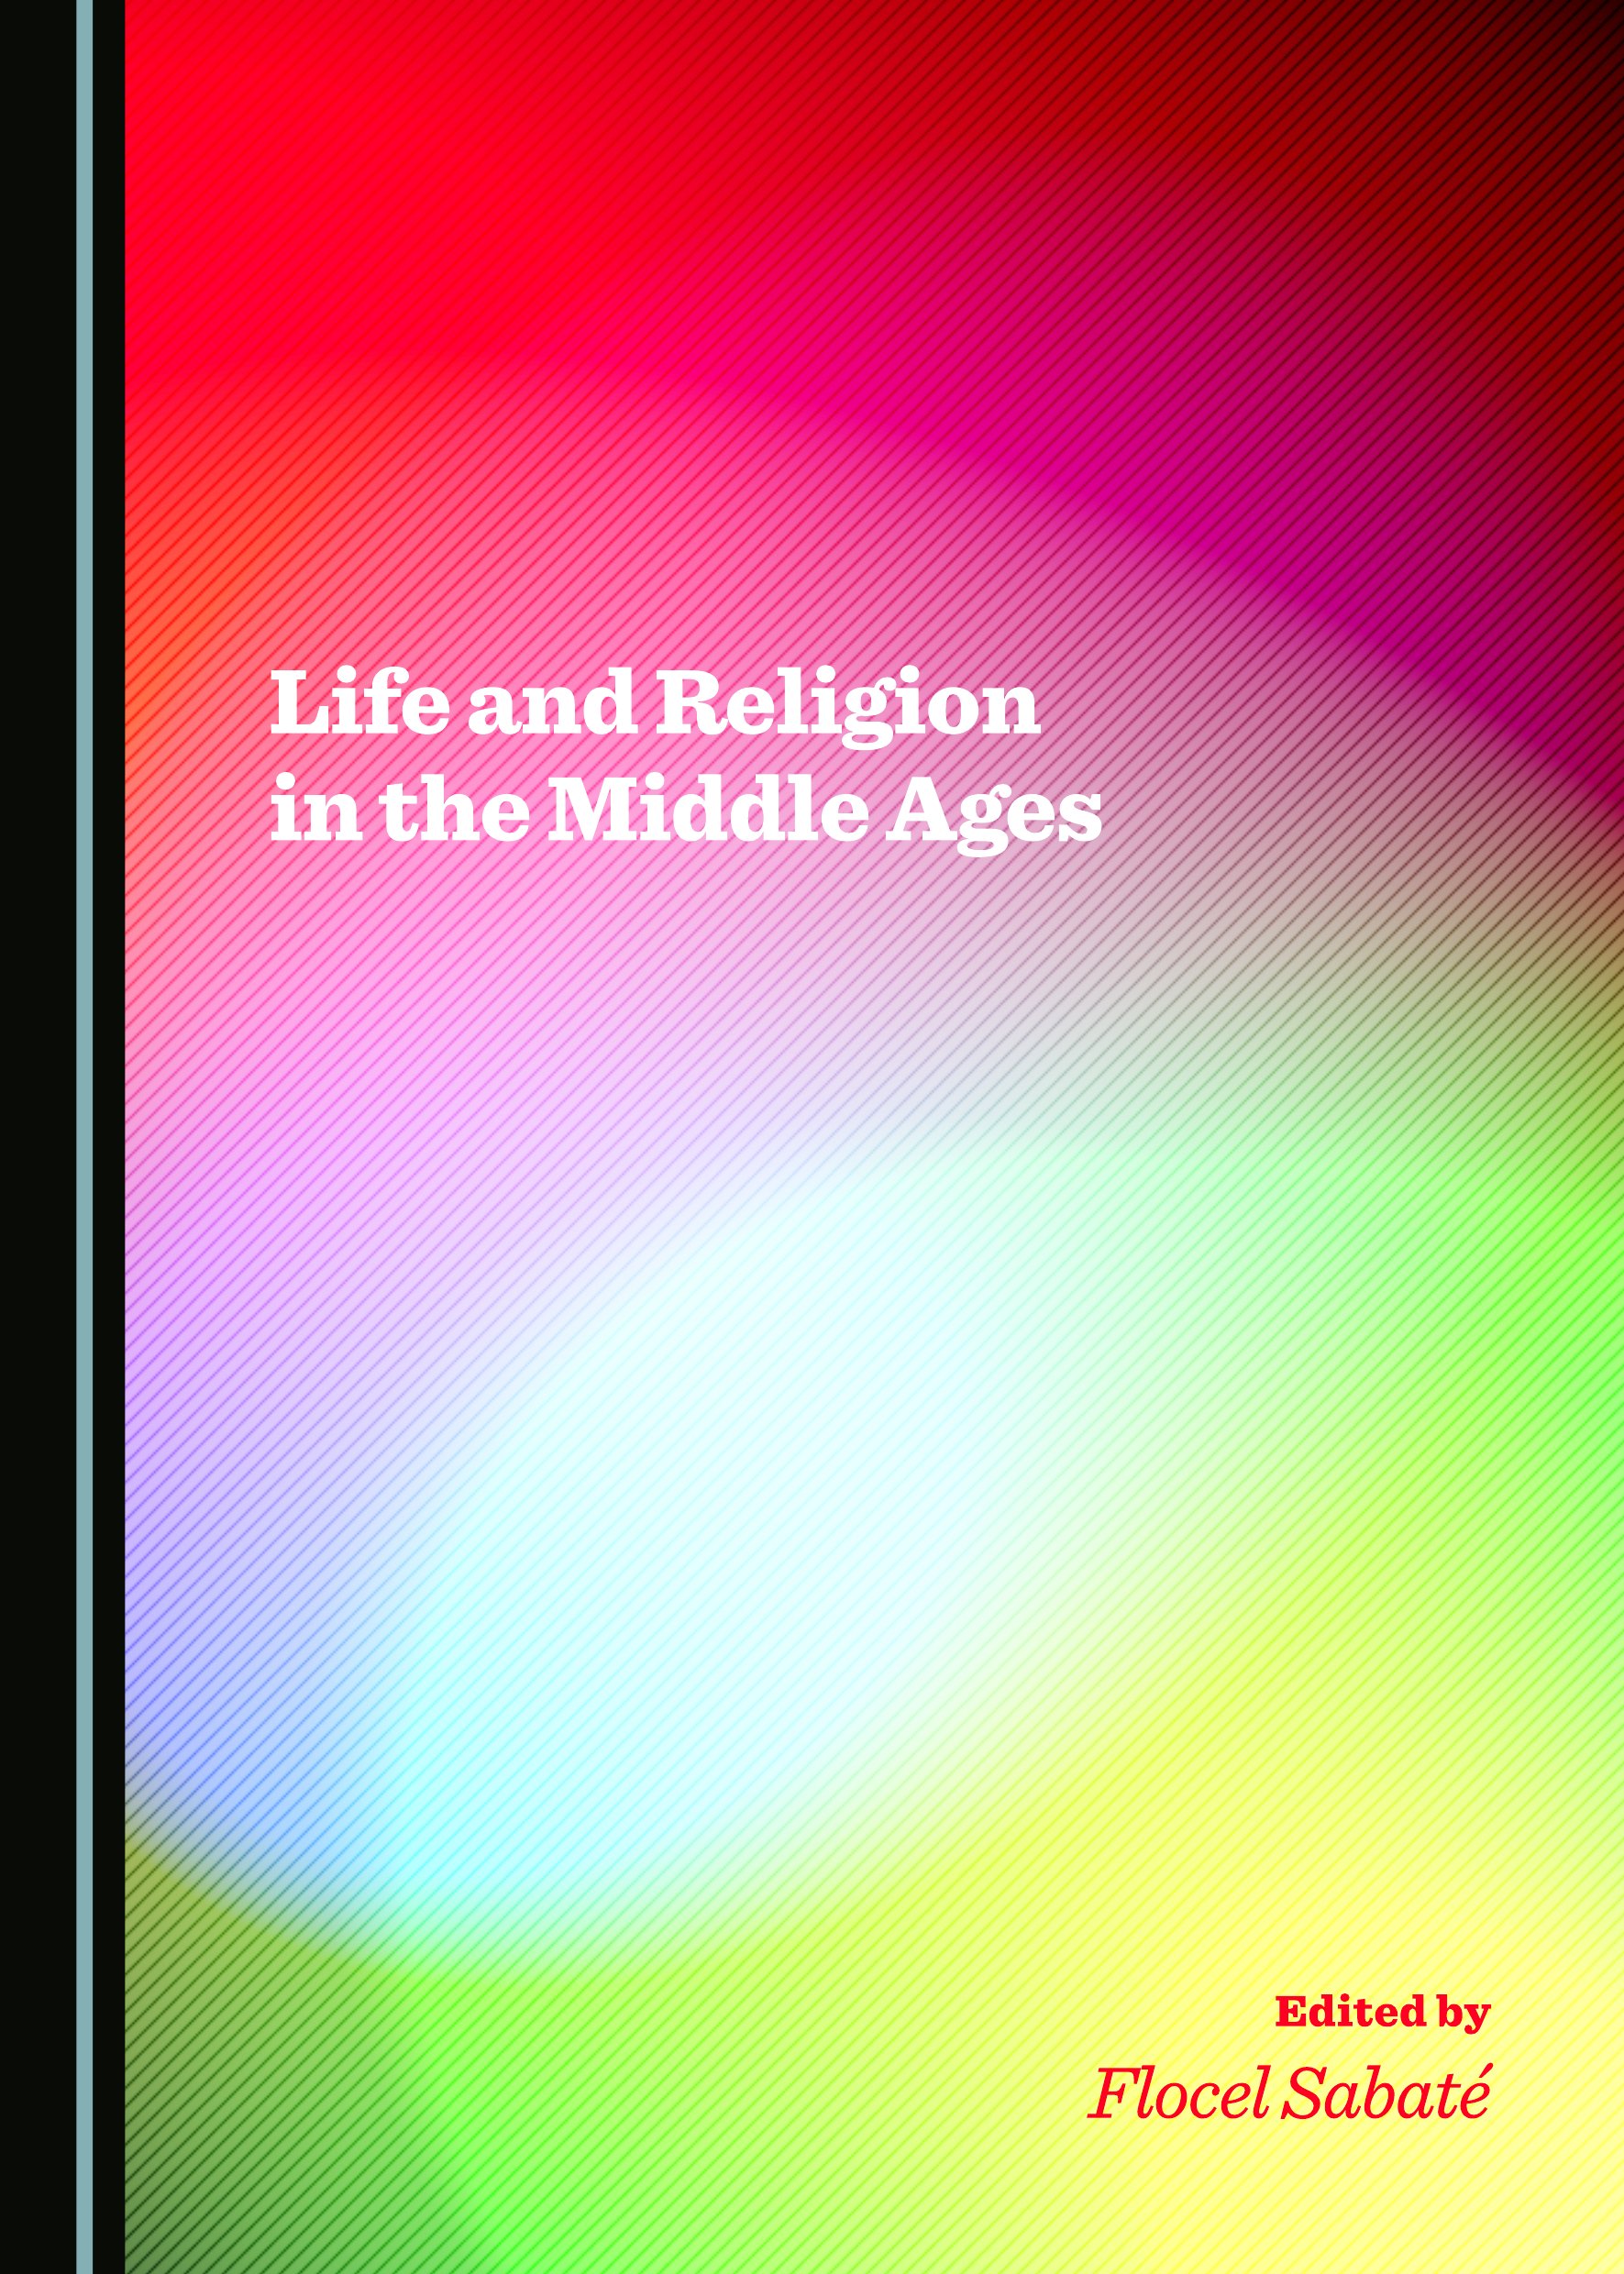 Imagen de portada del libro Life and religion in the middle ages